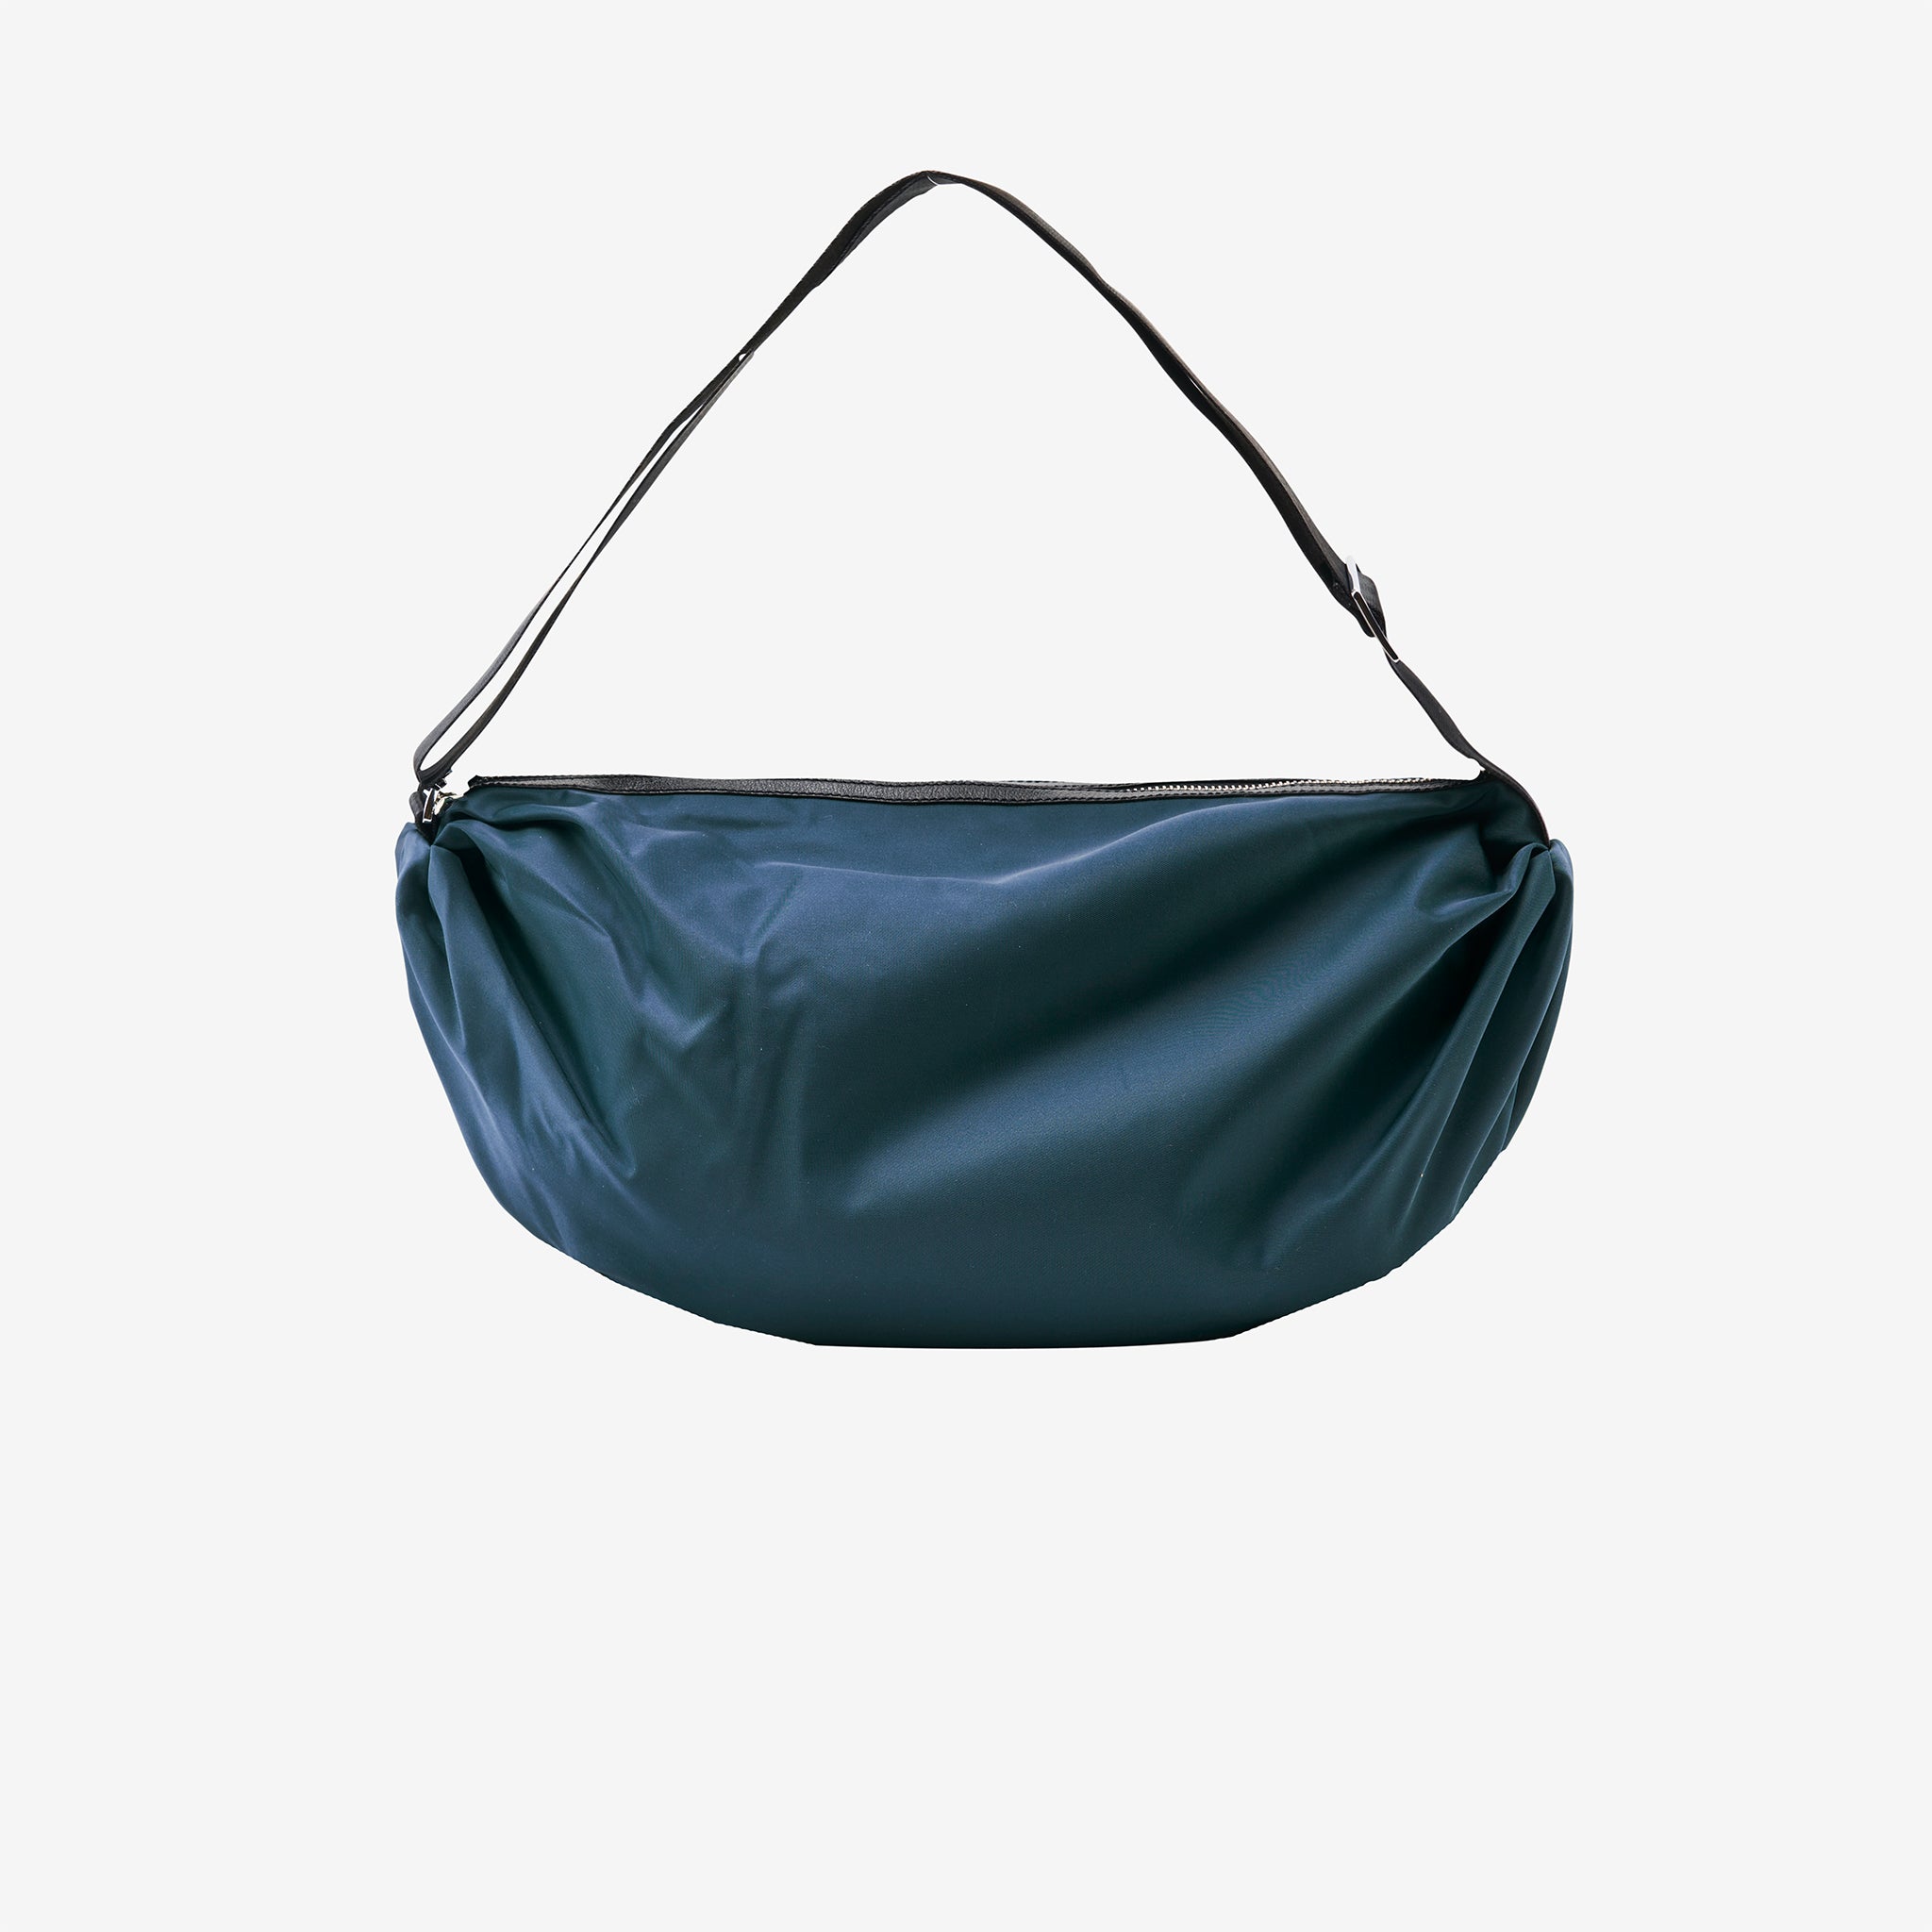 Buy Nehas Silk Cherry Women's Hand Bag with Wooden Handle at Amazon.in